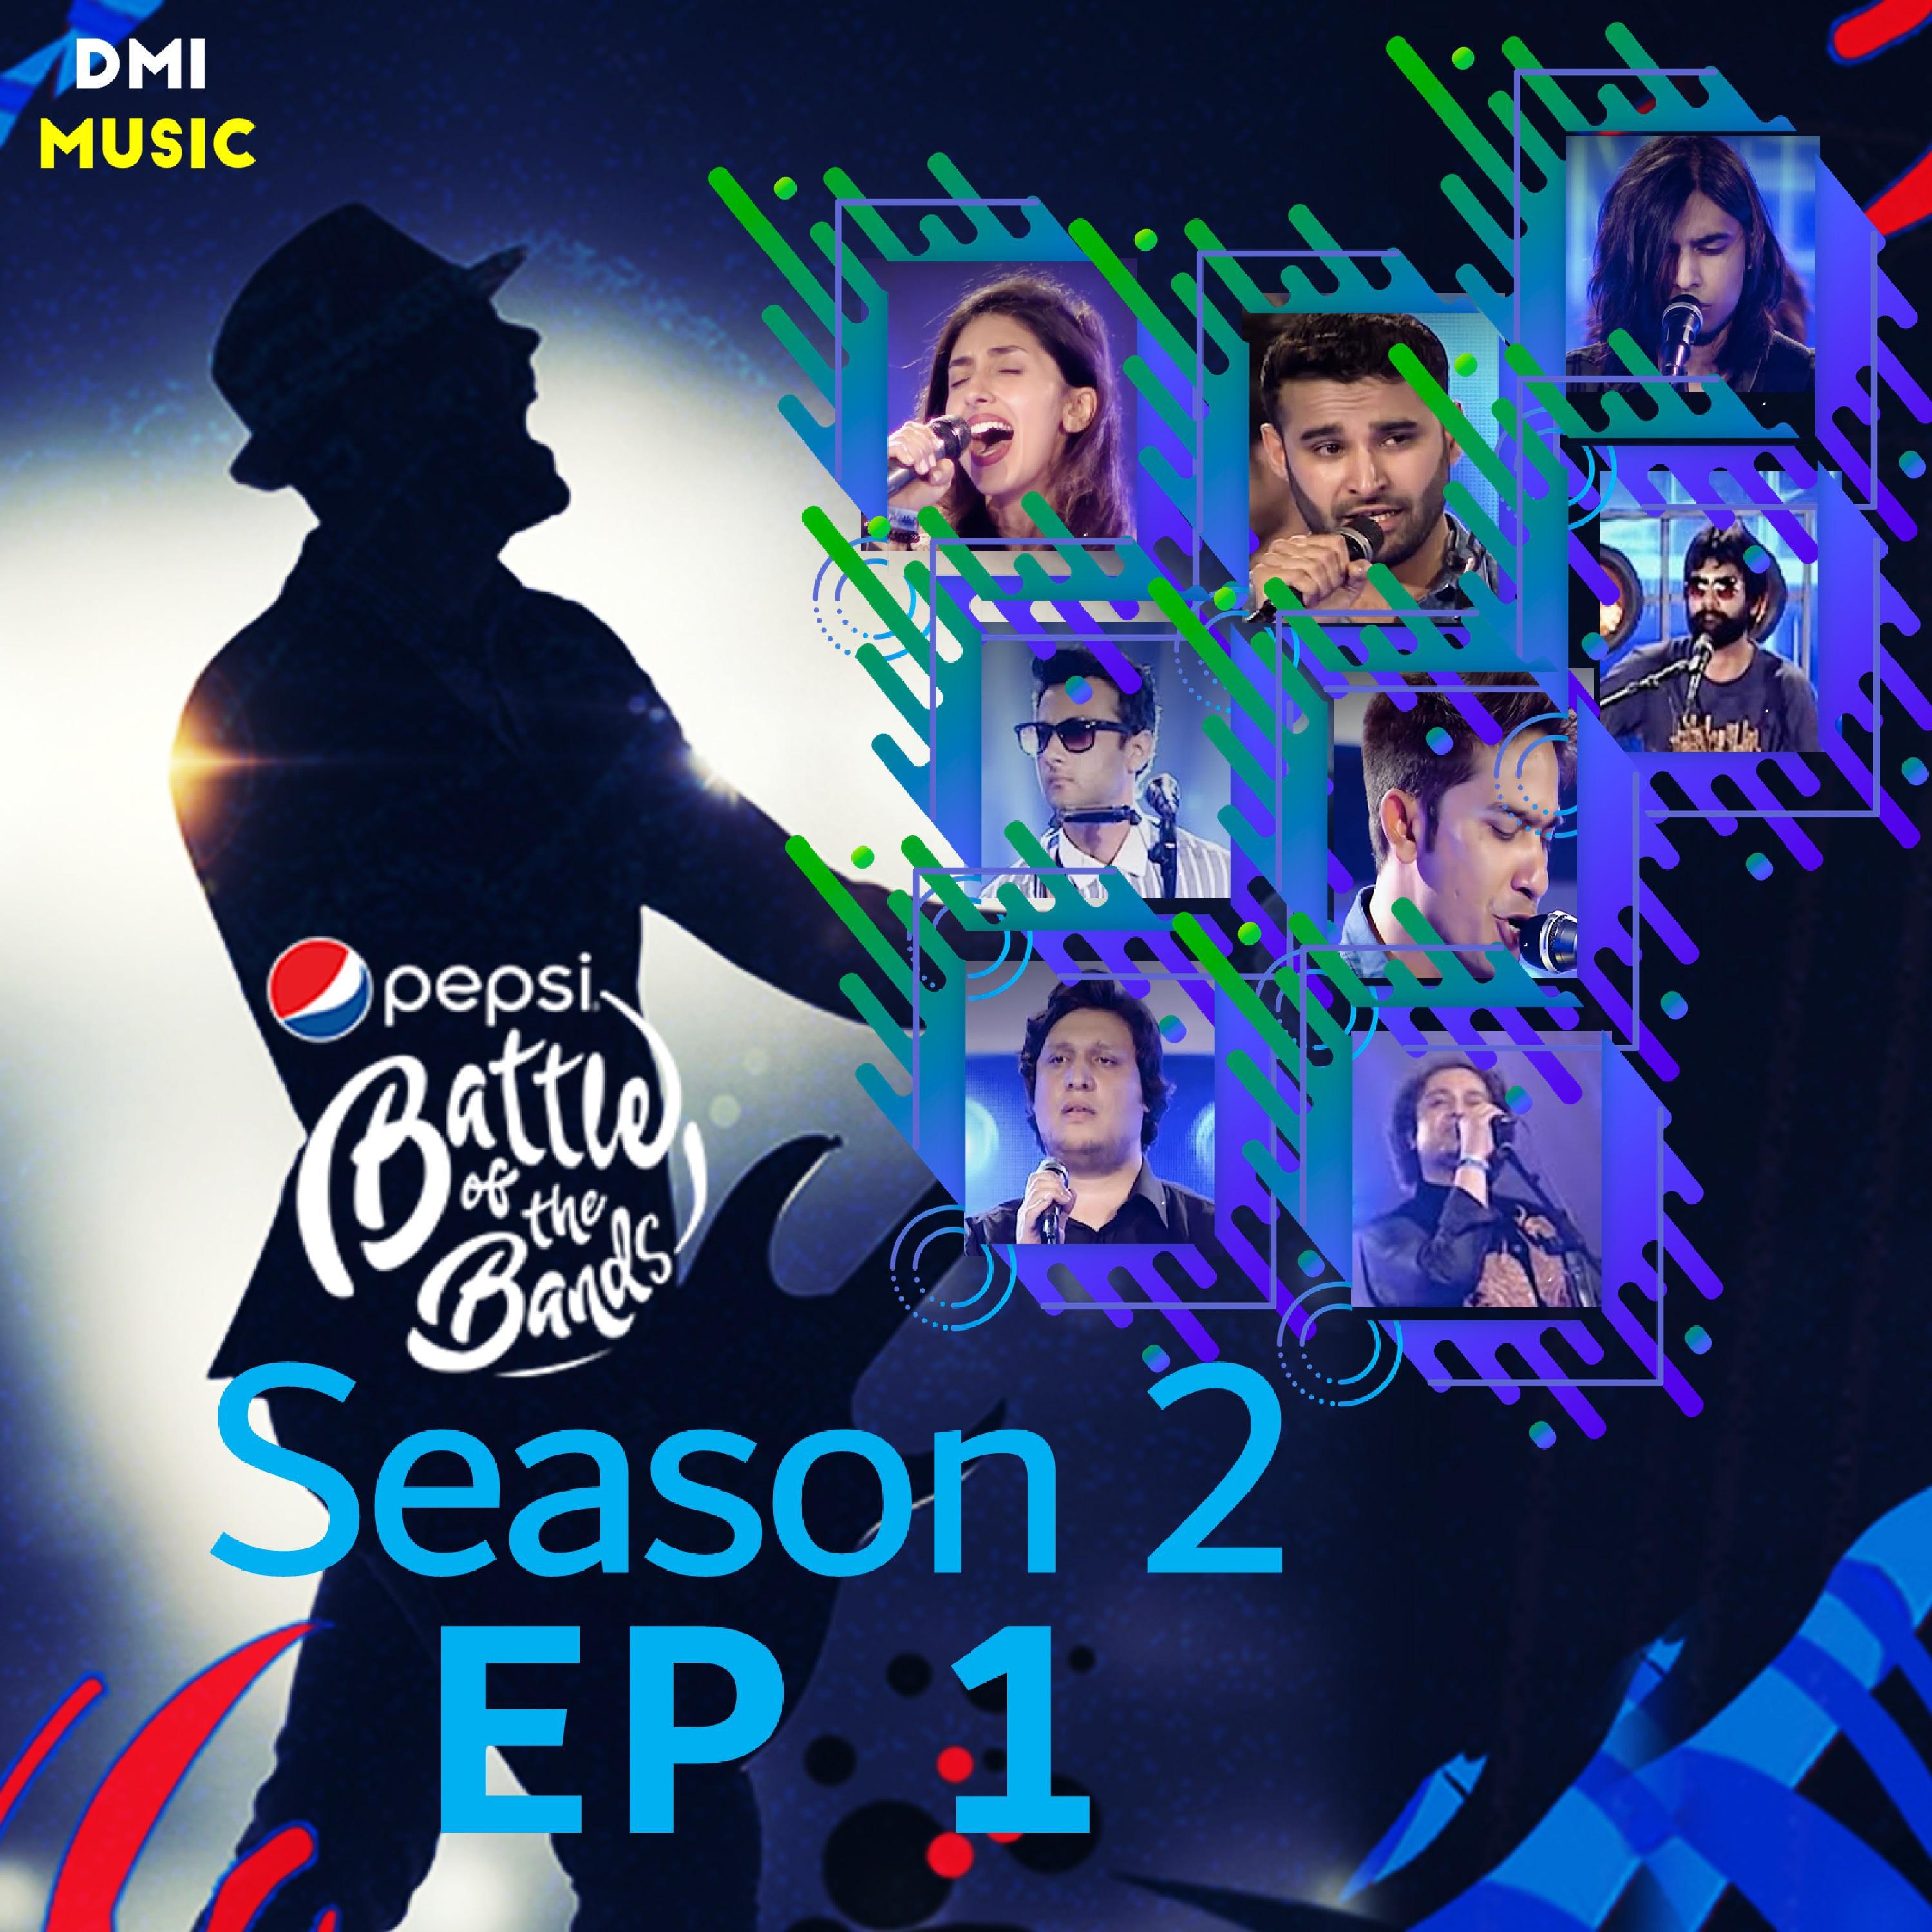 Pepsi Battle of the Bands Season 2: Episode 1